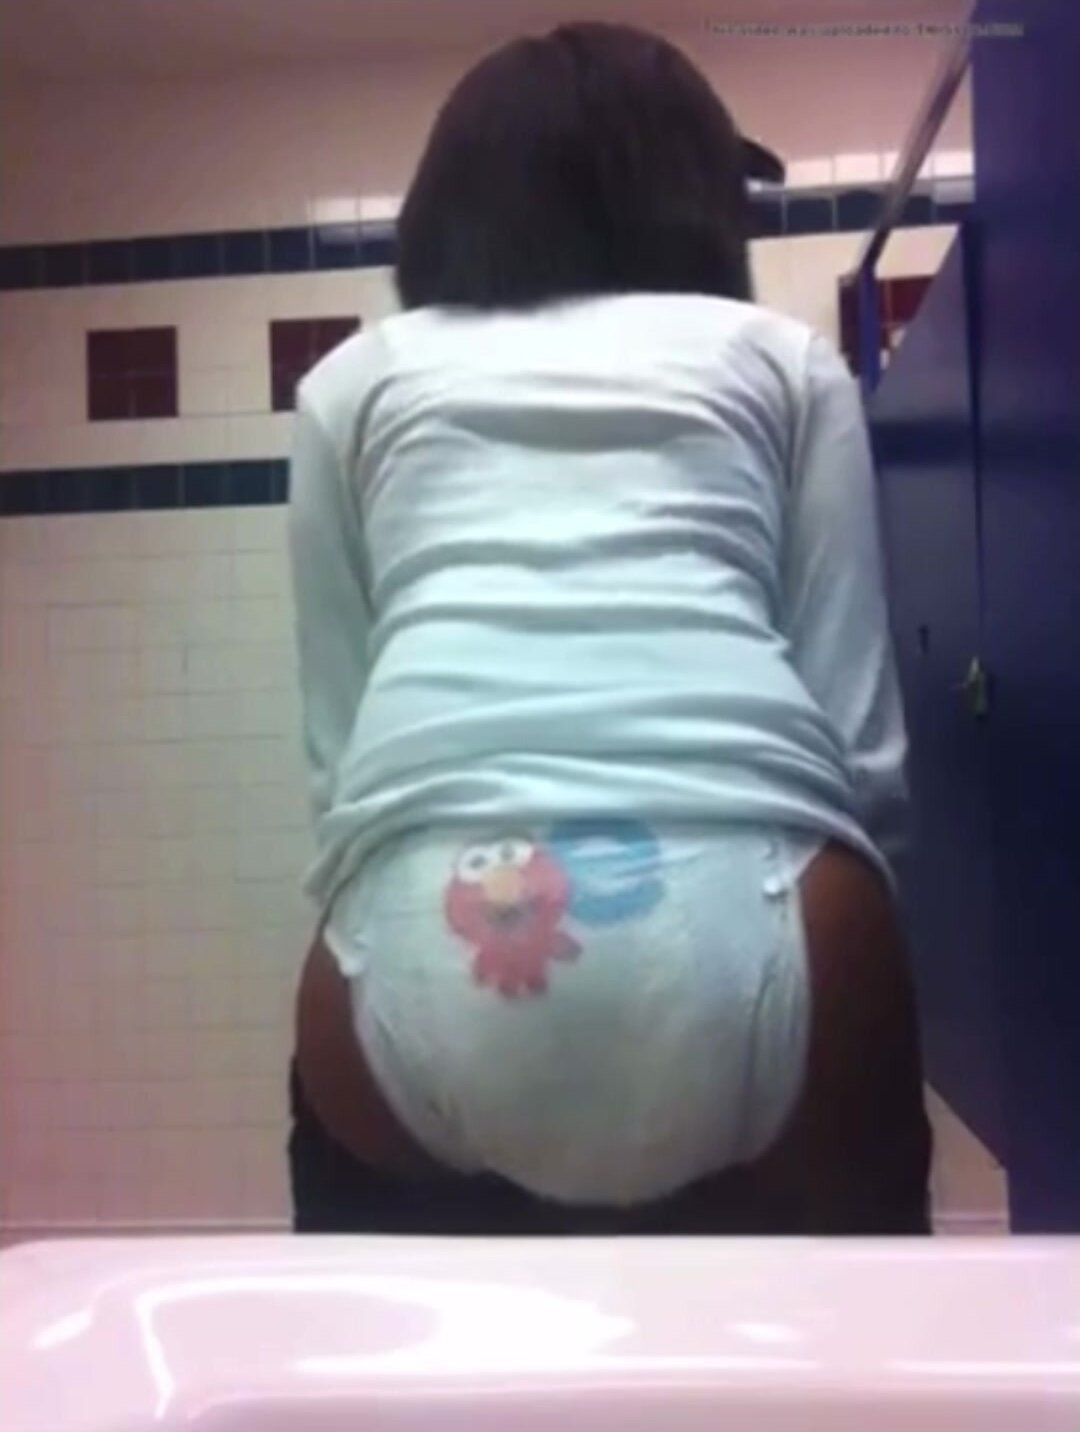 Girl poops herself in a diaper in a school restroom